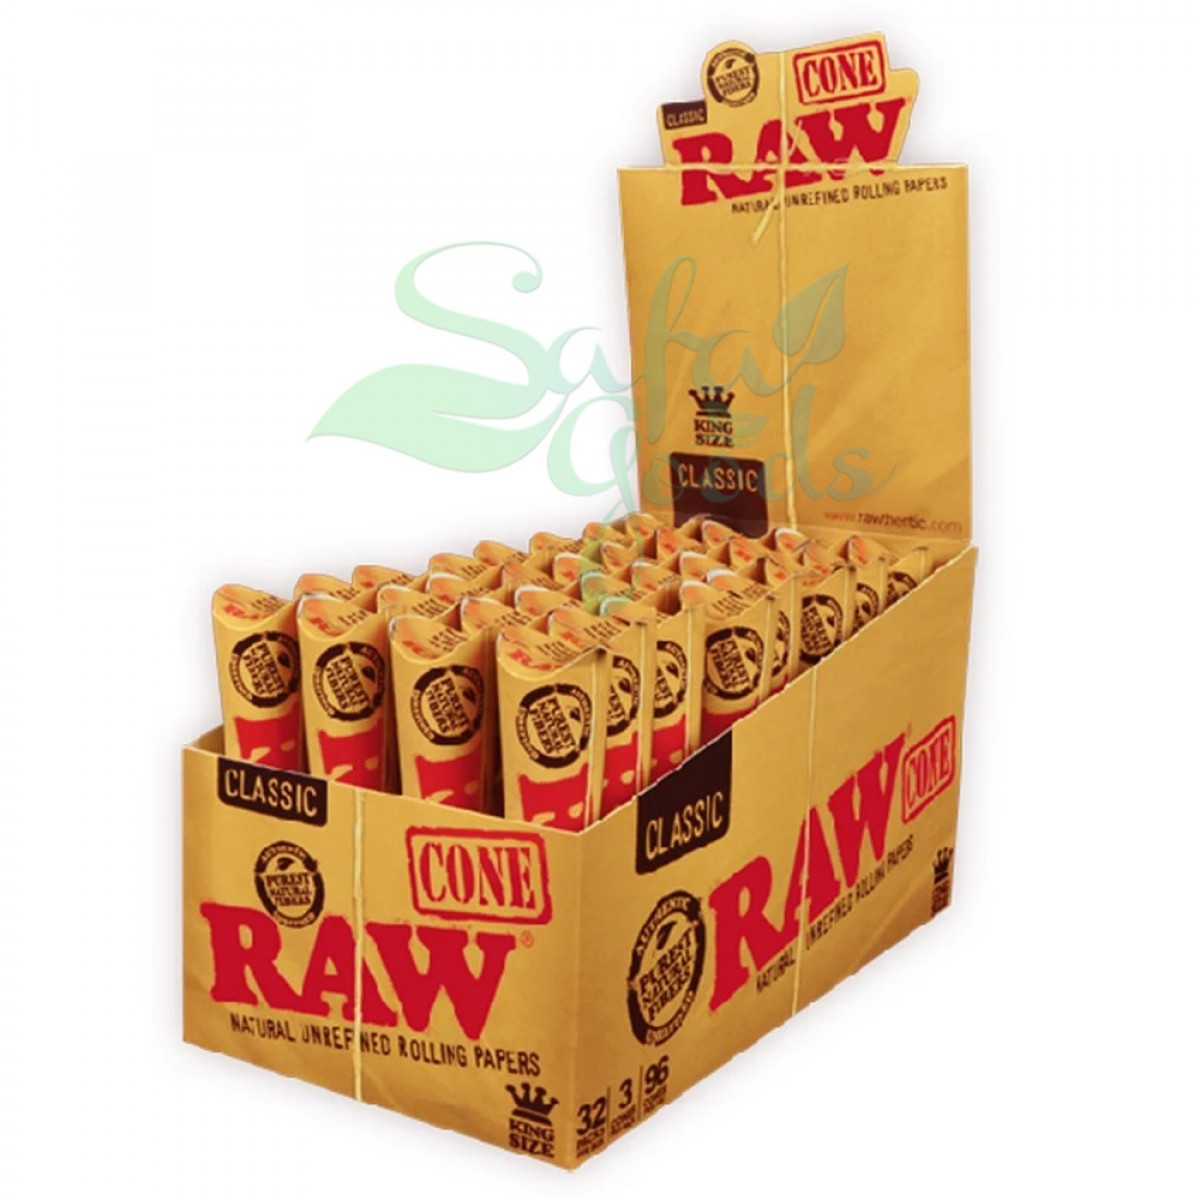 RAW - Classic Cones Display Box